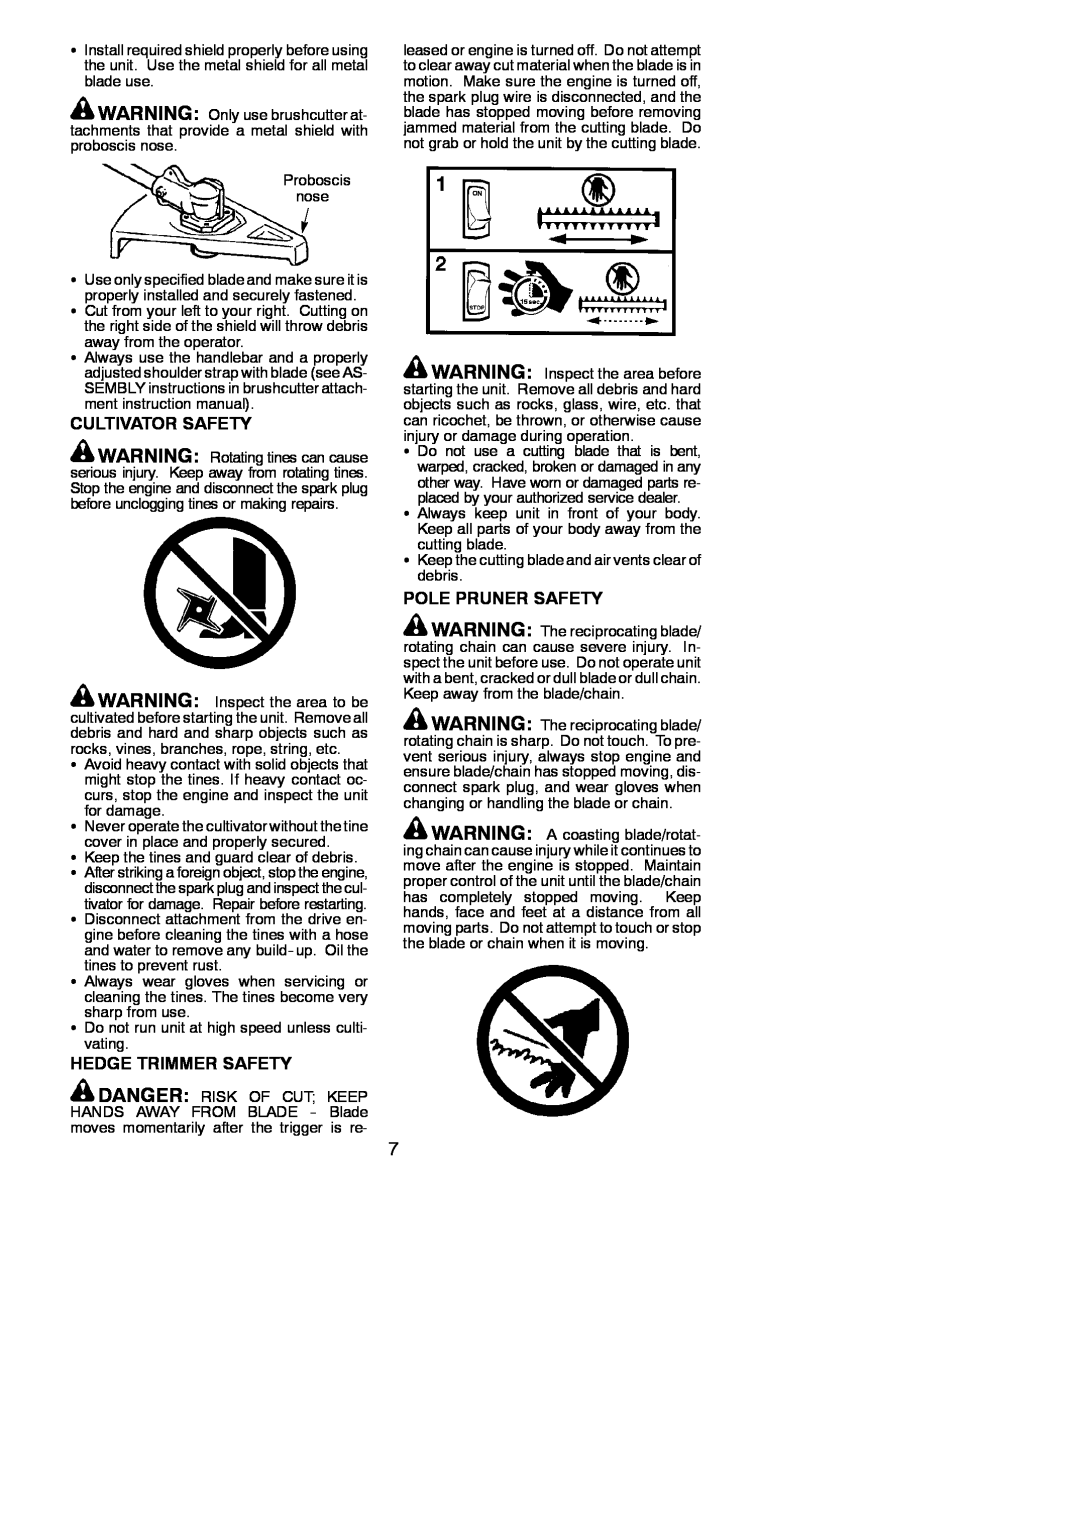 Poulan 115248726, 952711943 instruction manual Cultivator Safety, Hedge Trimmer Safety, Pole Pruner Safety 